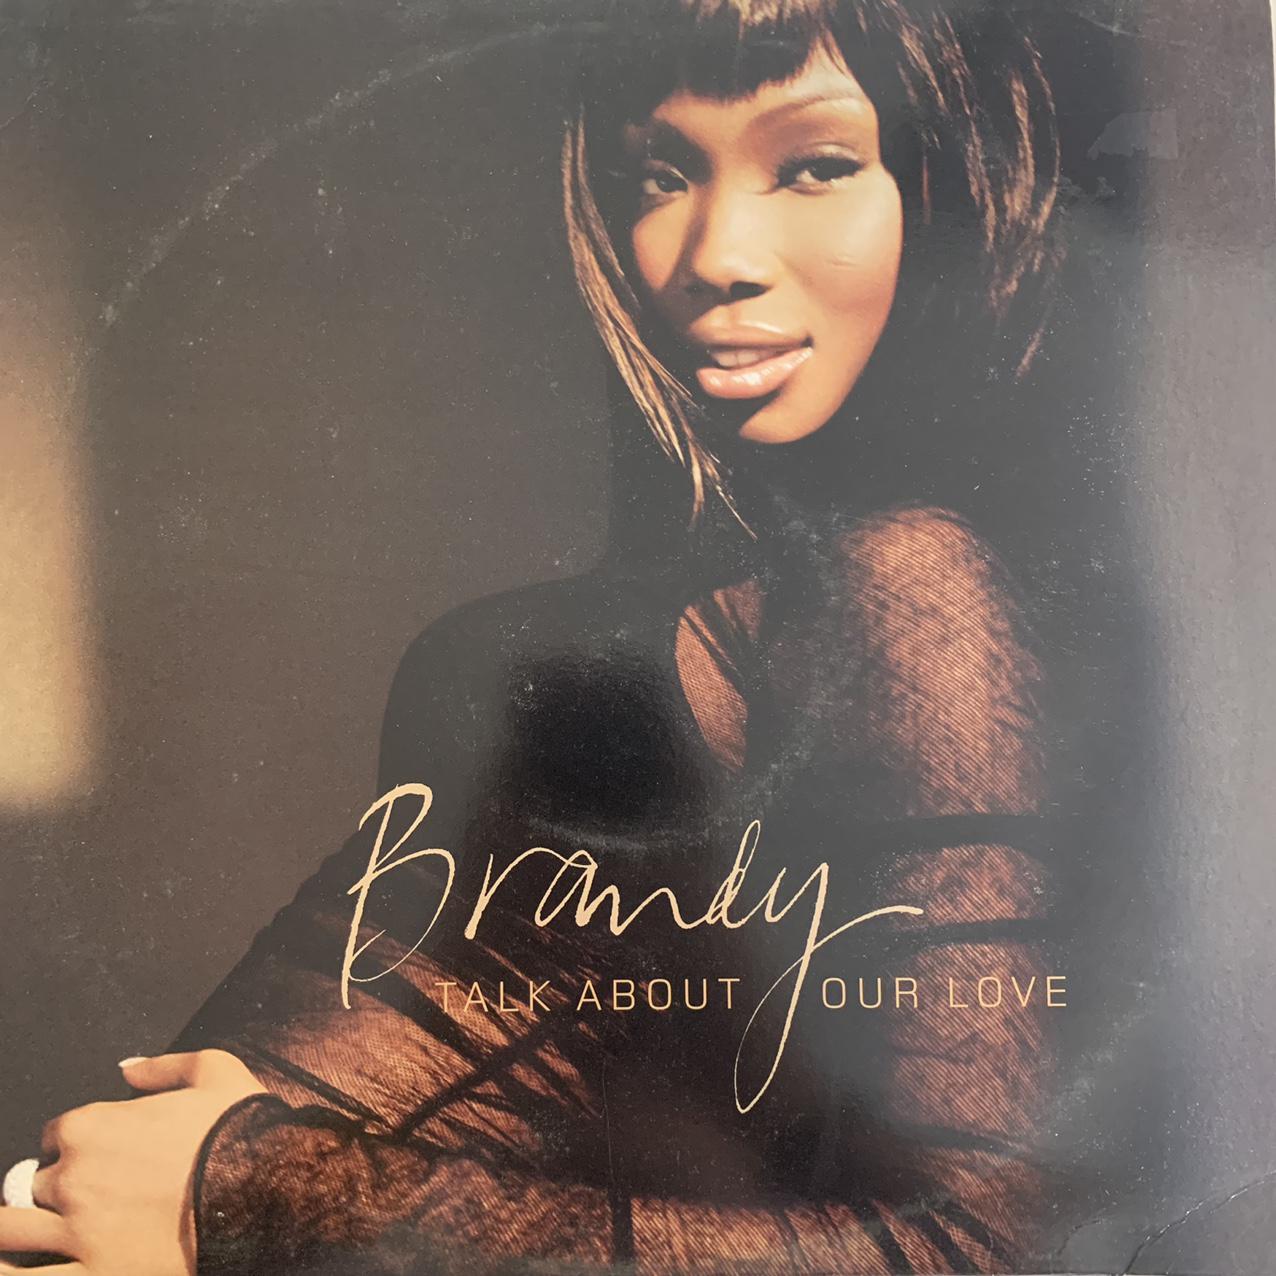 skrivestil Rettidig Tredive Brandy “Talk About Our Love” 4 Version 12inch Vinyl – Classic wax records